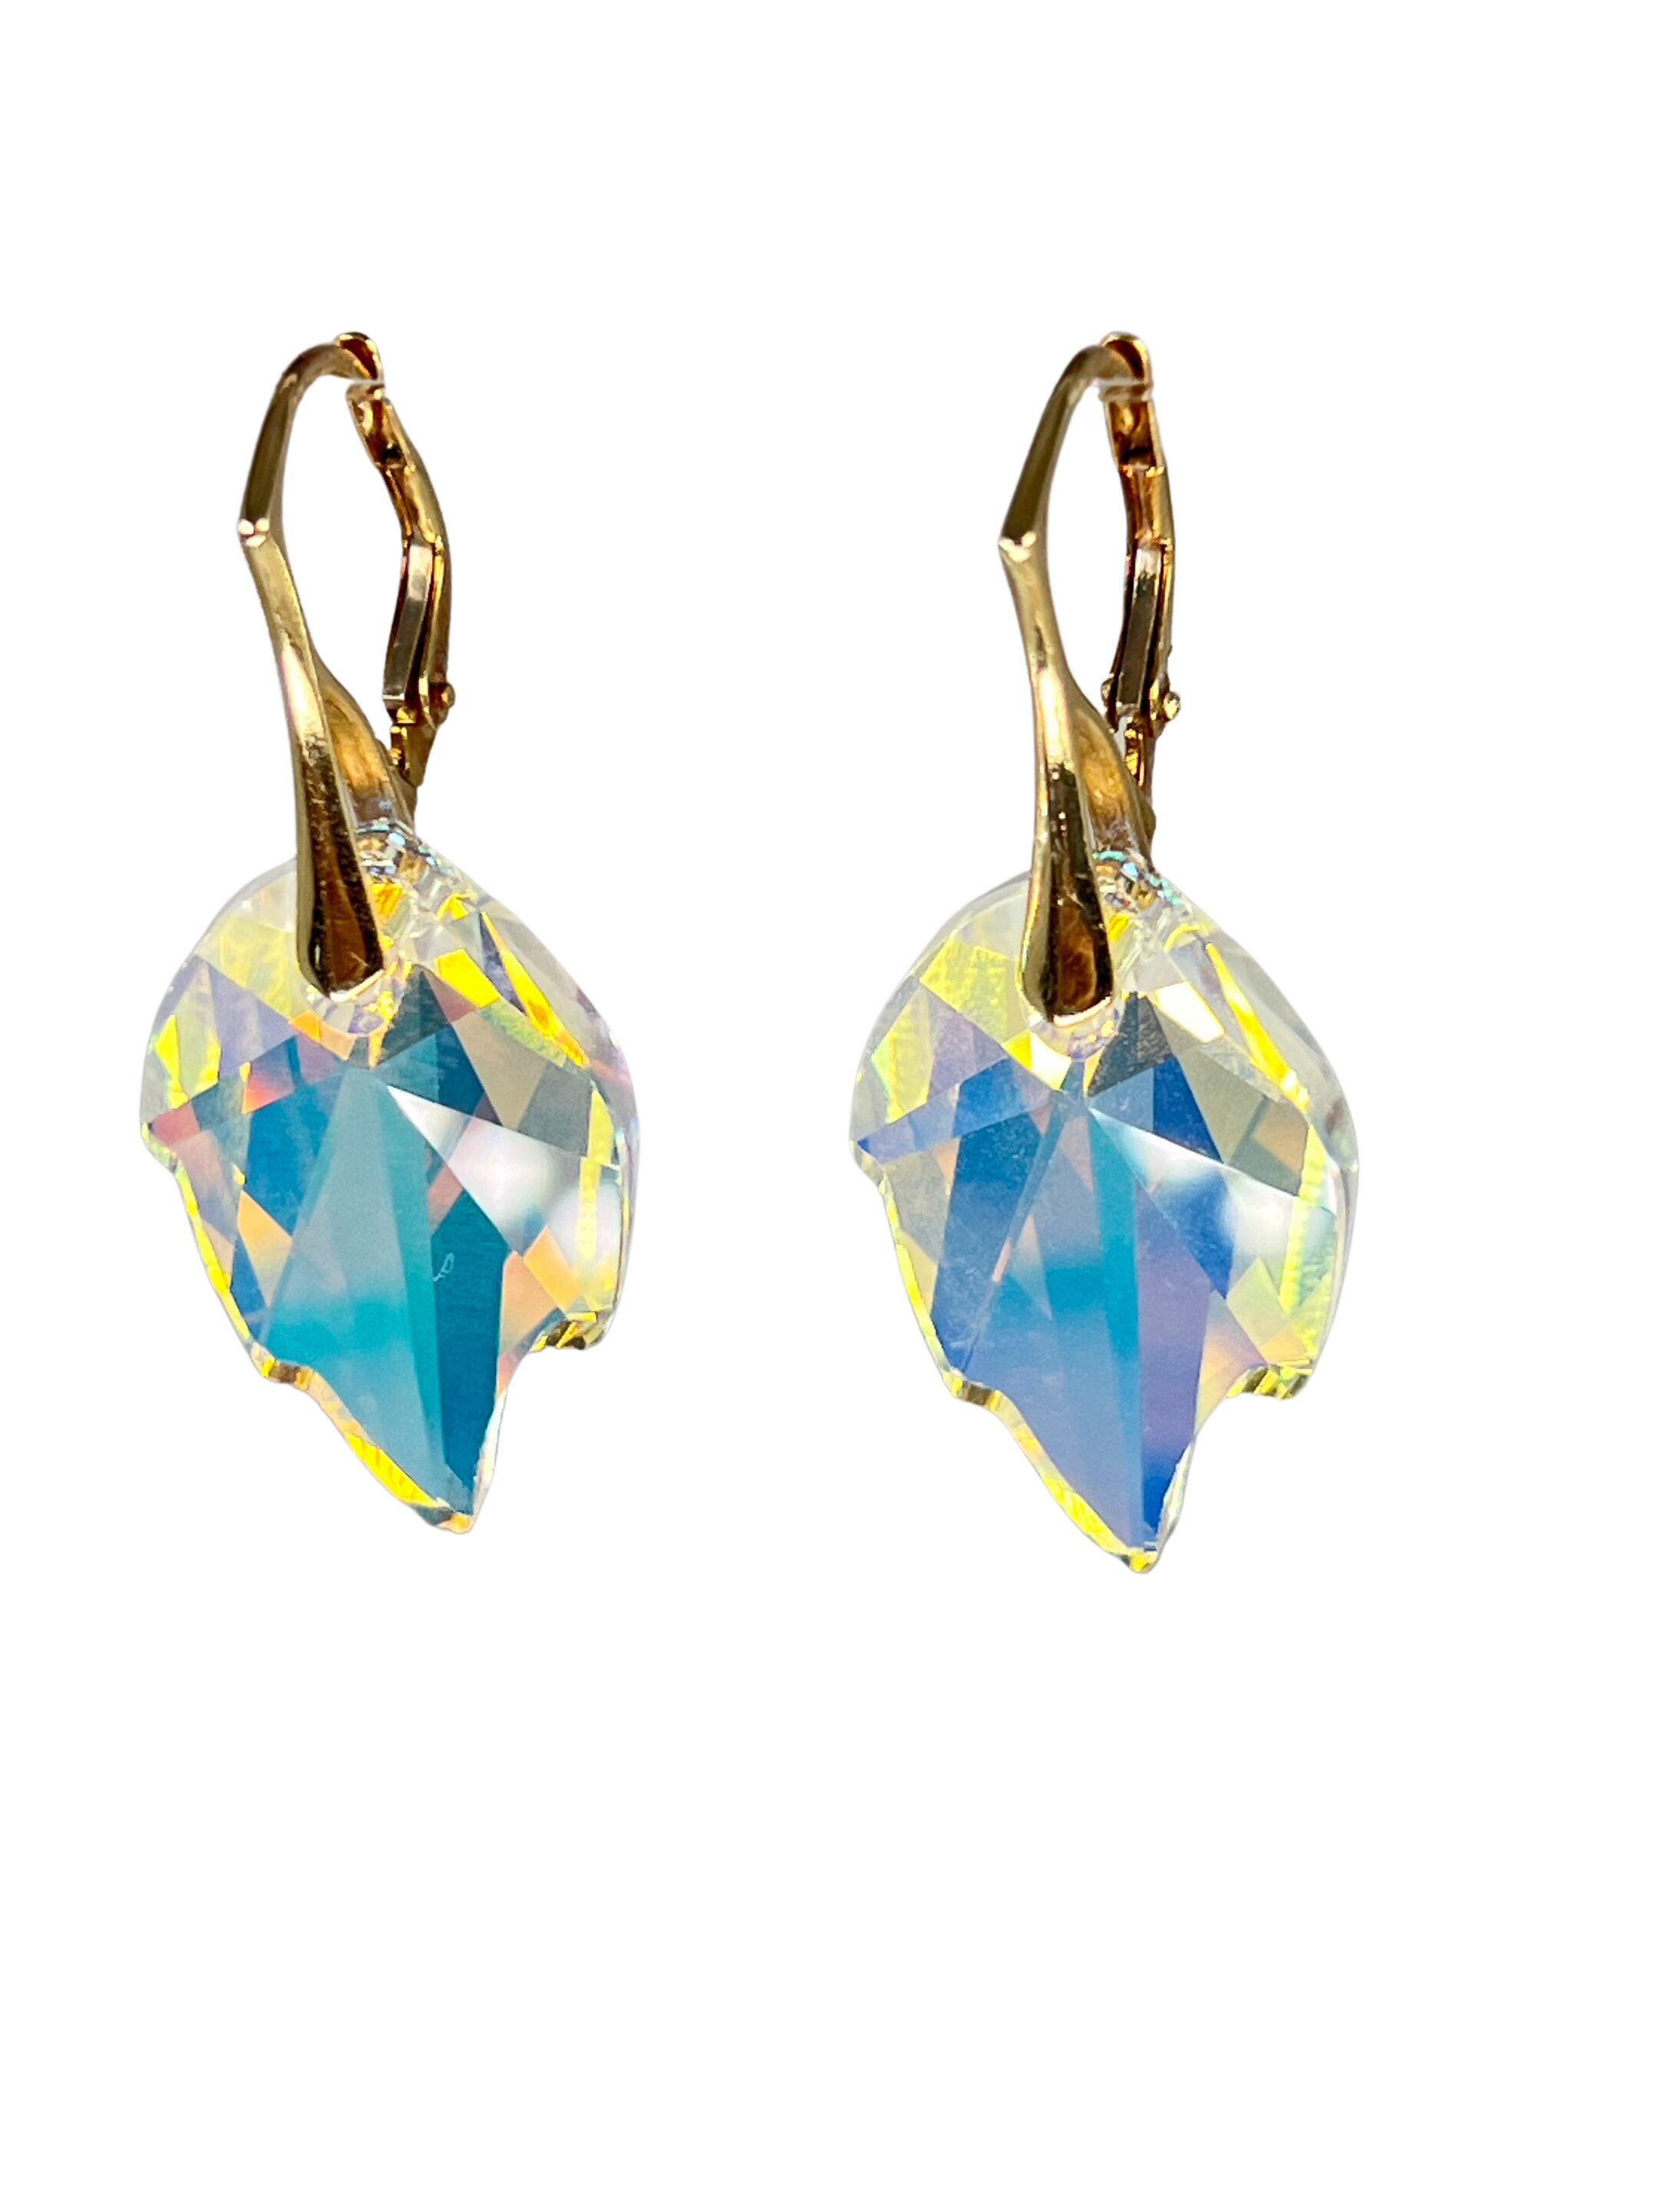 Distinctive gold earrings with rainbow AB crystal